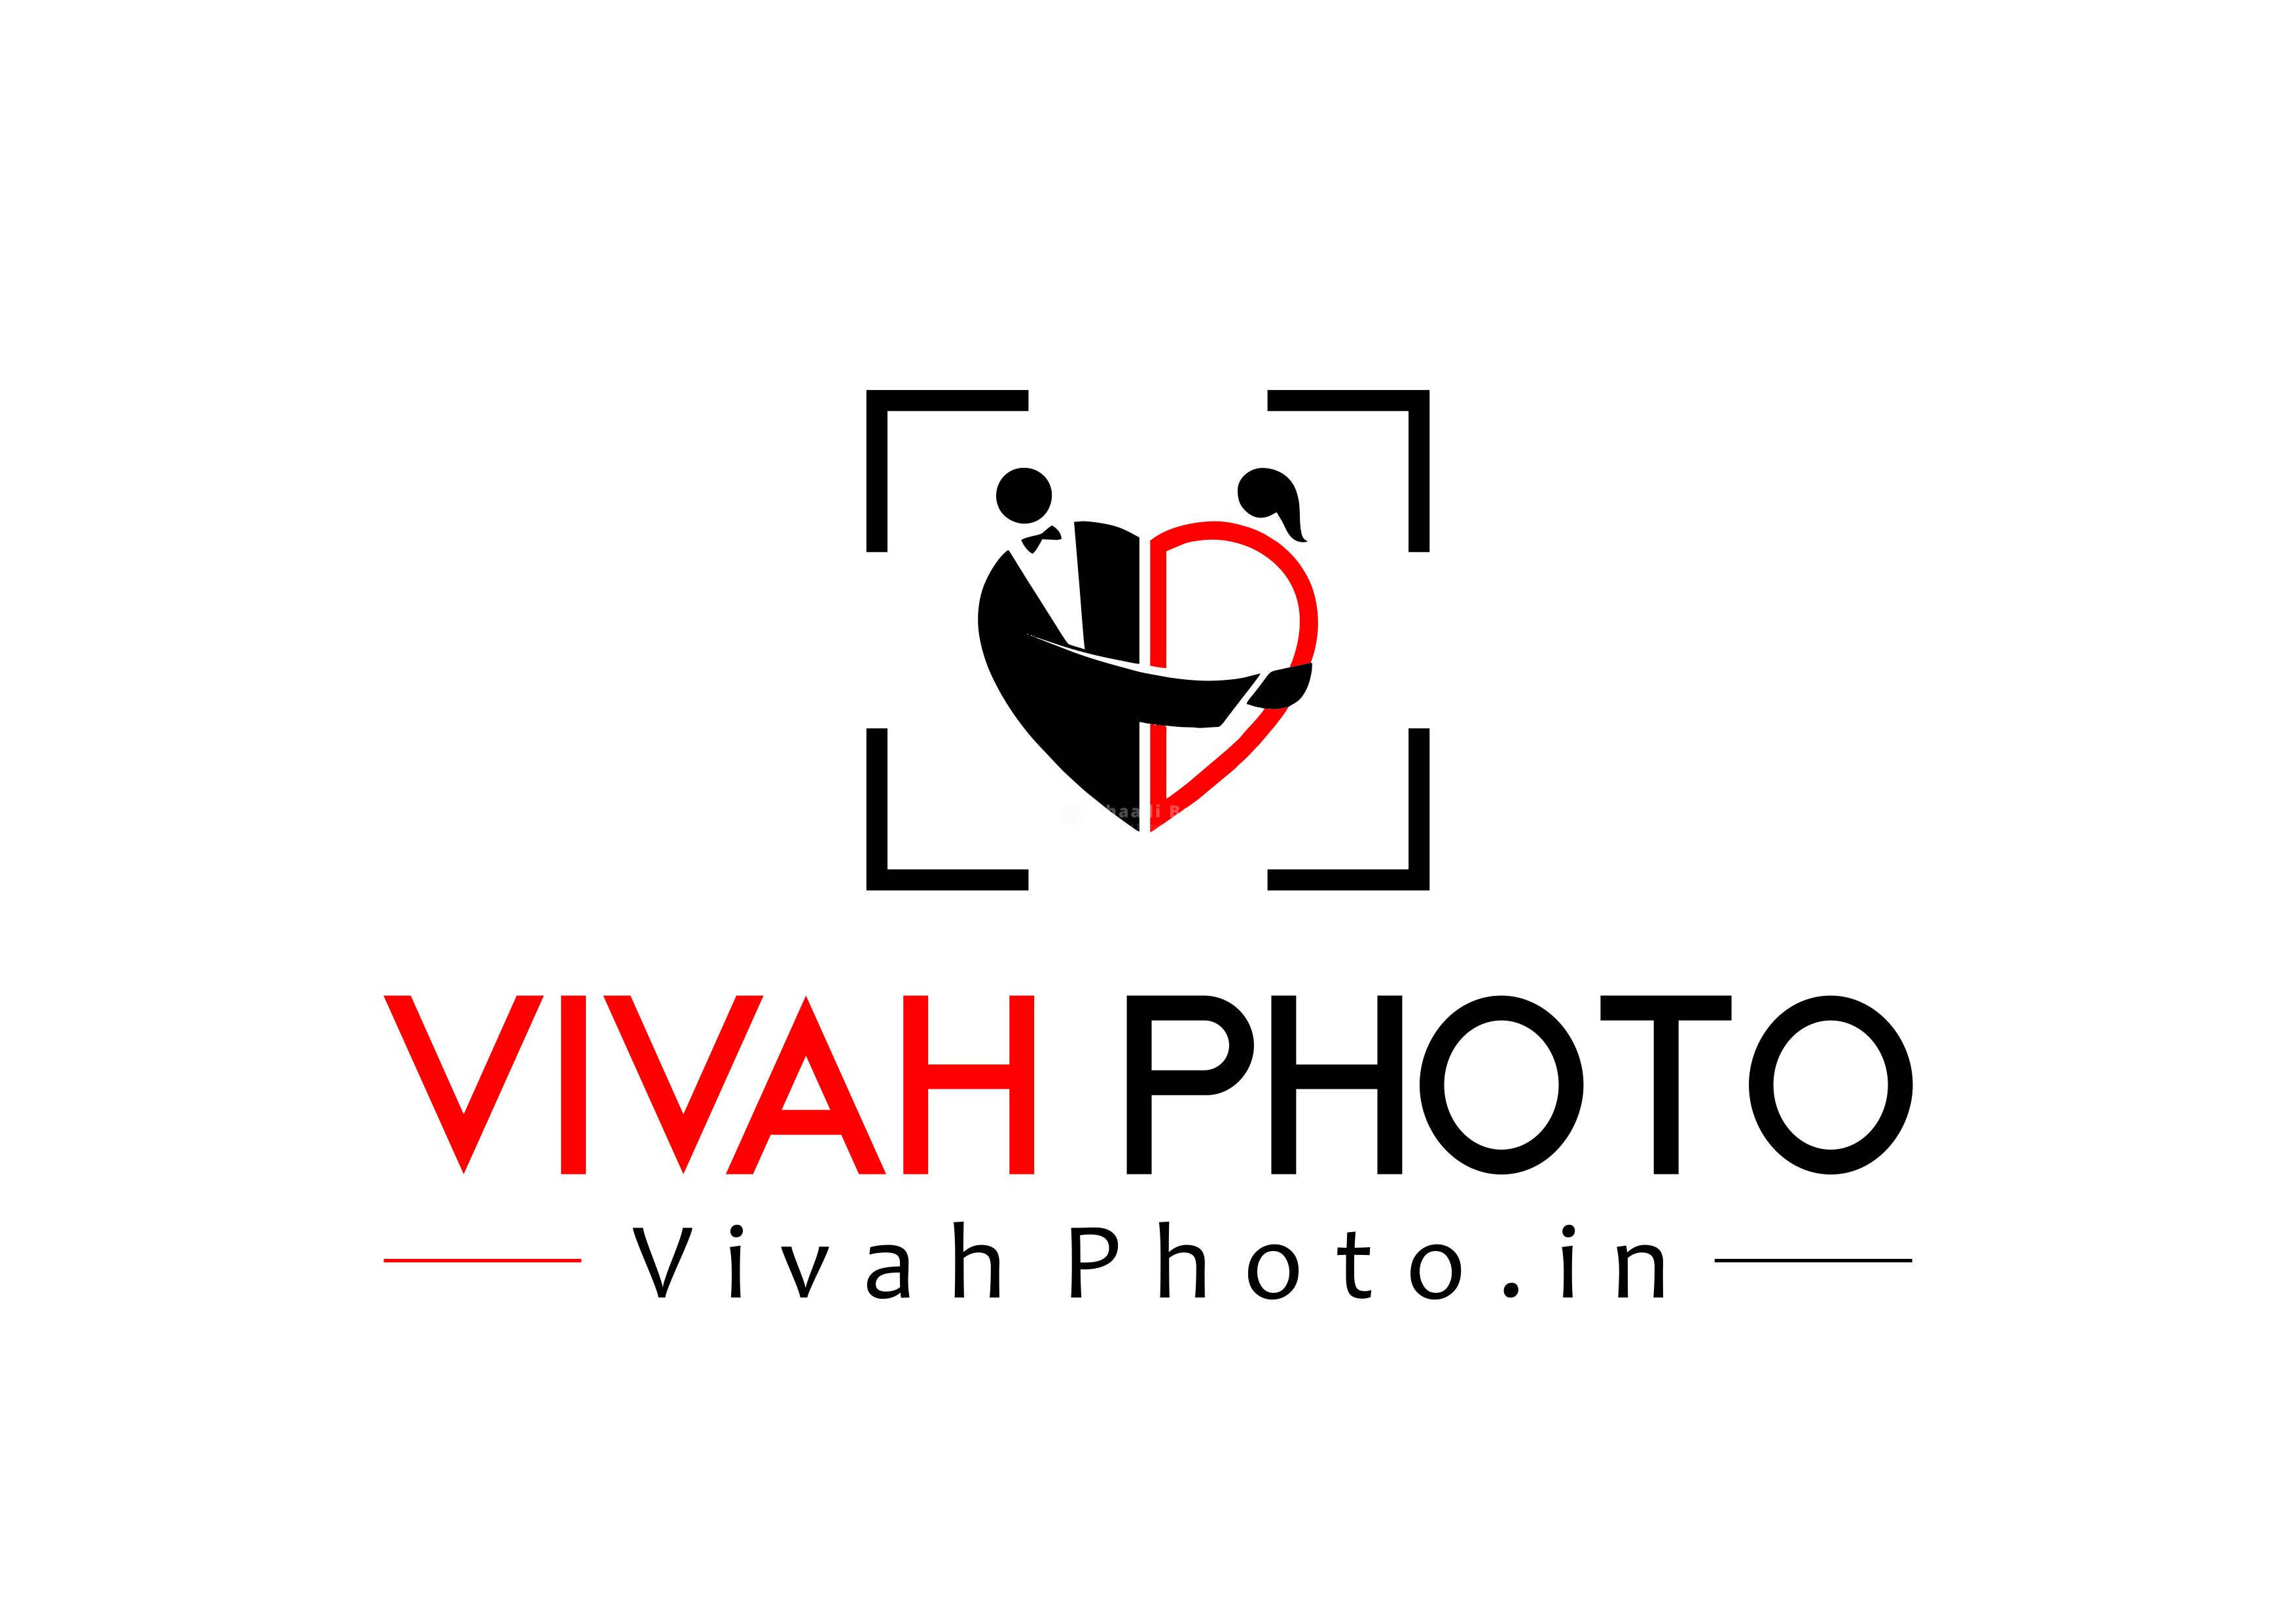 Vivah Photo